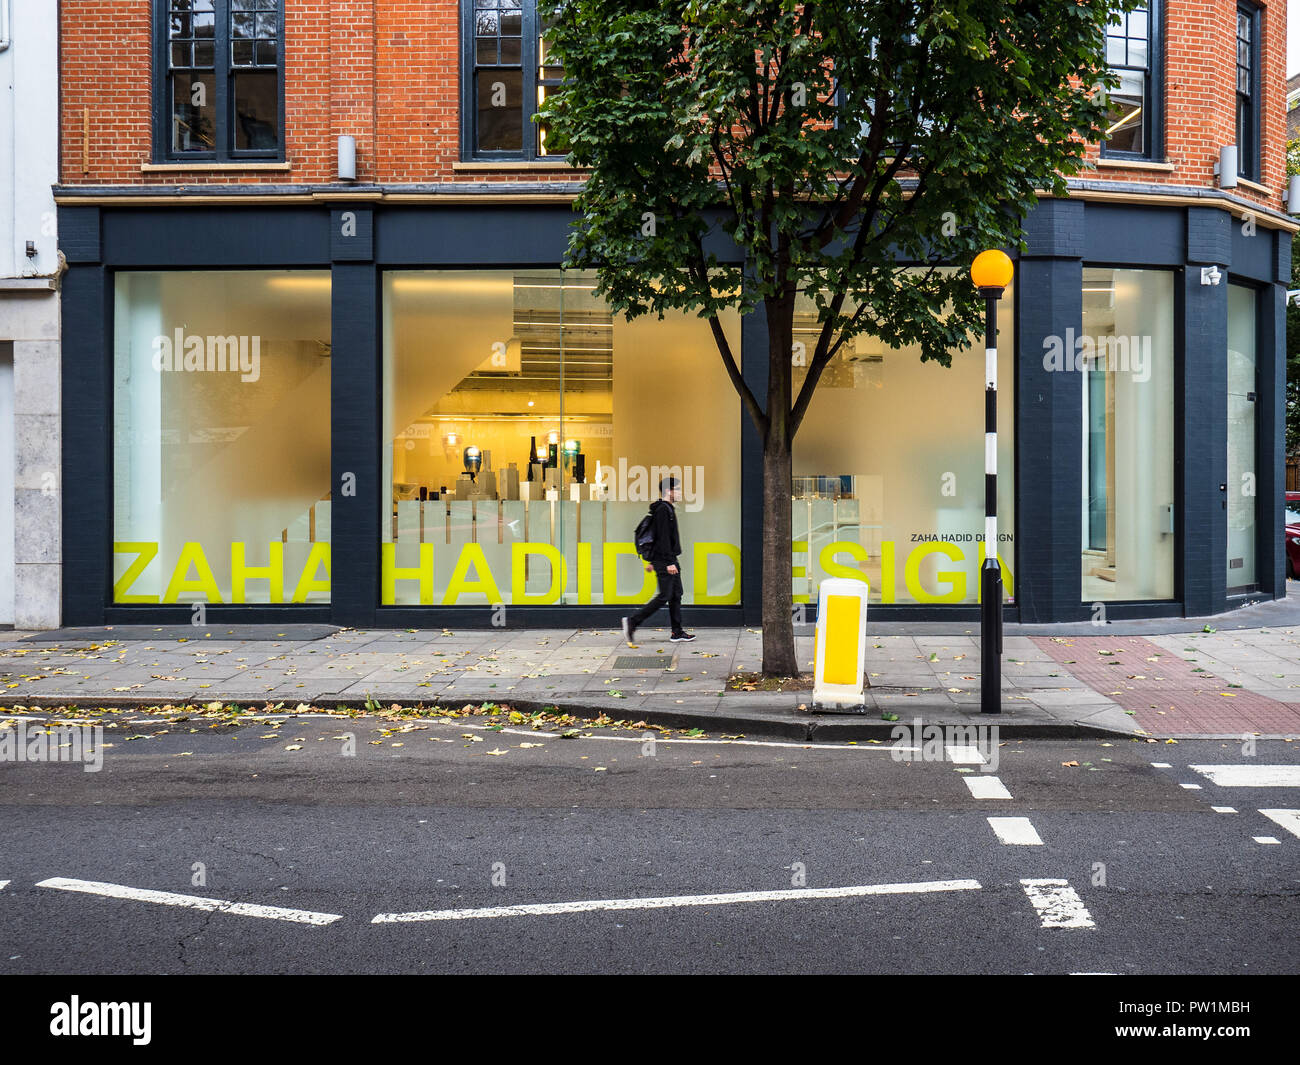 Zaha Hadid Design Store in Goswell Road, Clerkenwell, London. Zaha Hadid Design Shop London. Stock Photo